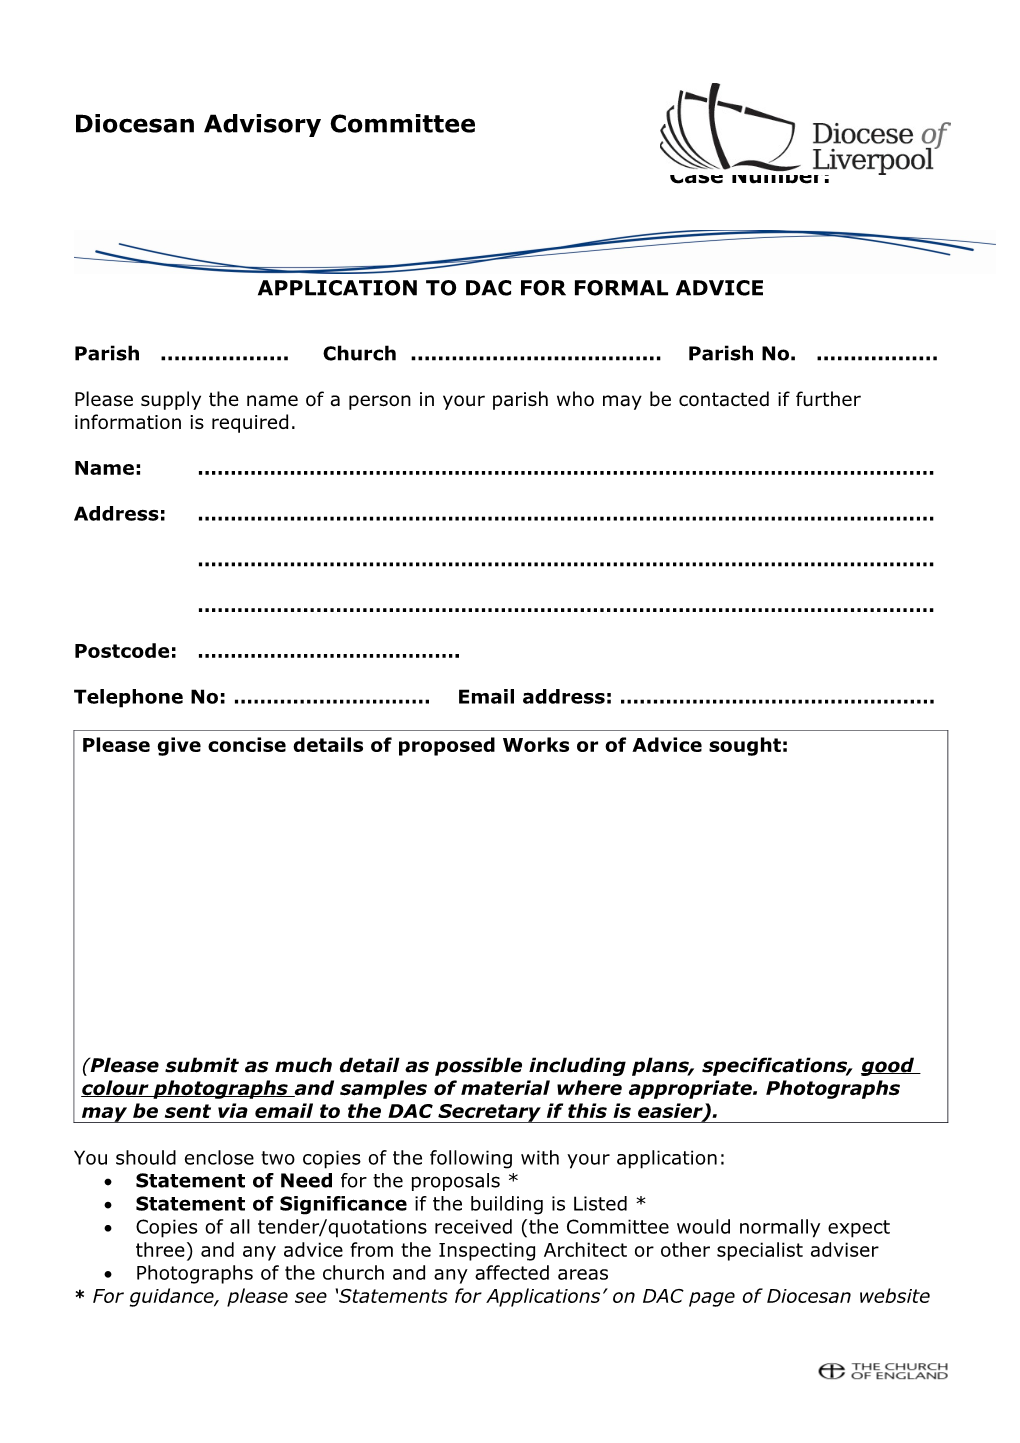 DAC Advice Application Form